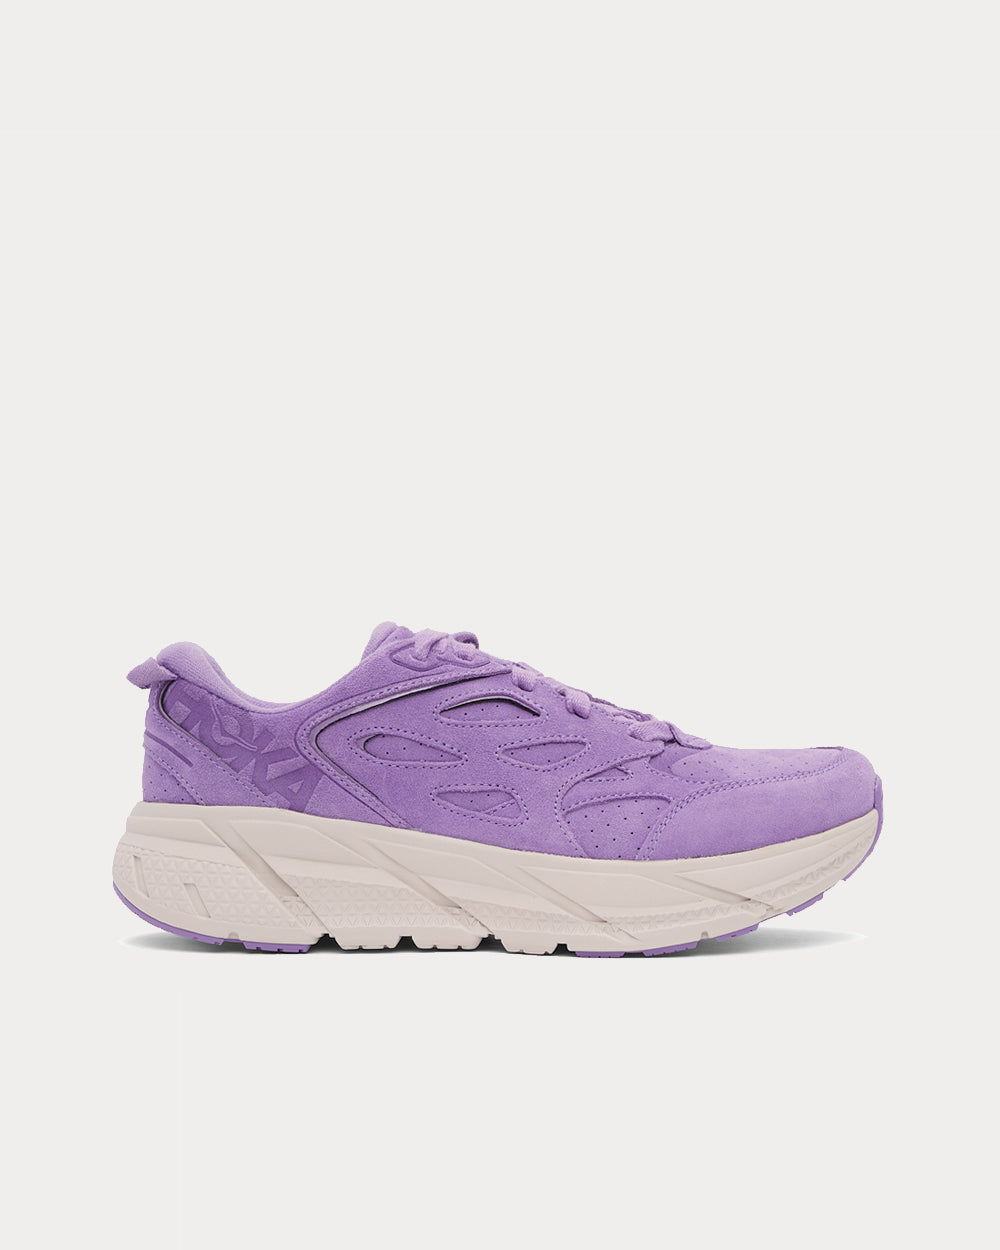 Clifton L Suede Chalk Violet / Lilac Ash Low Top Sneakers